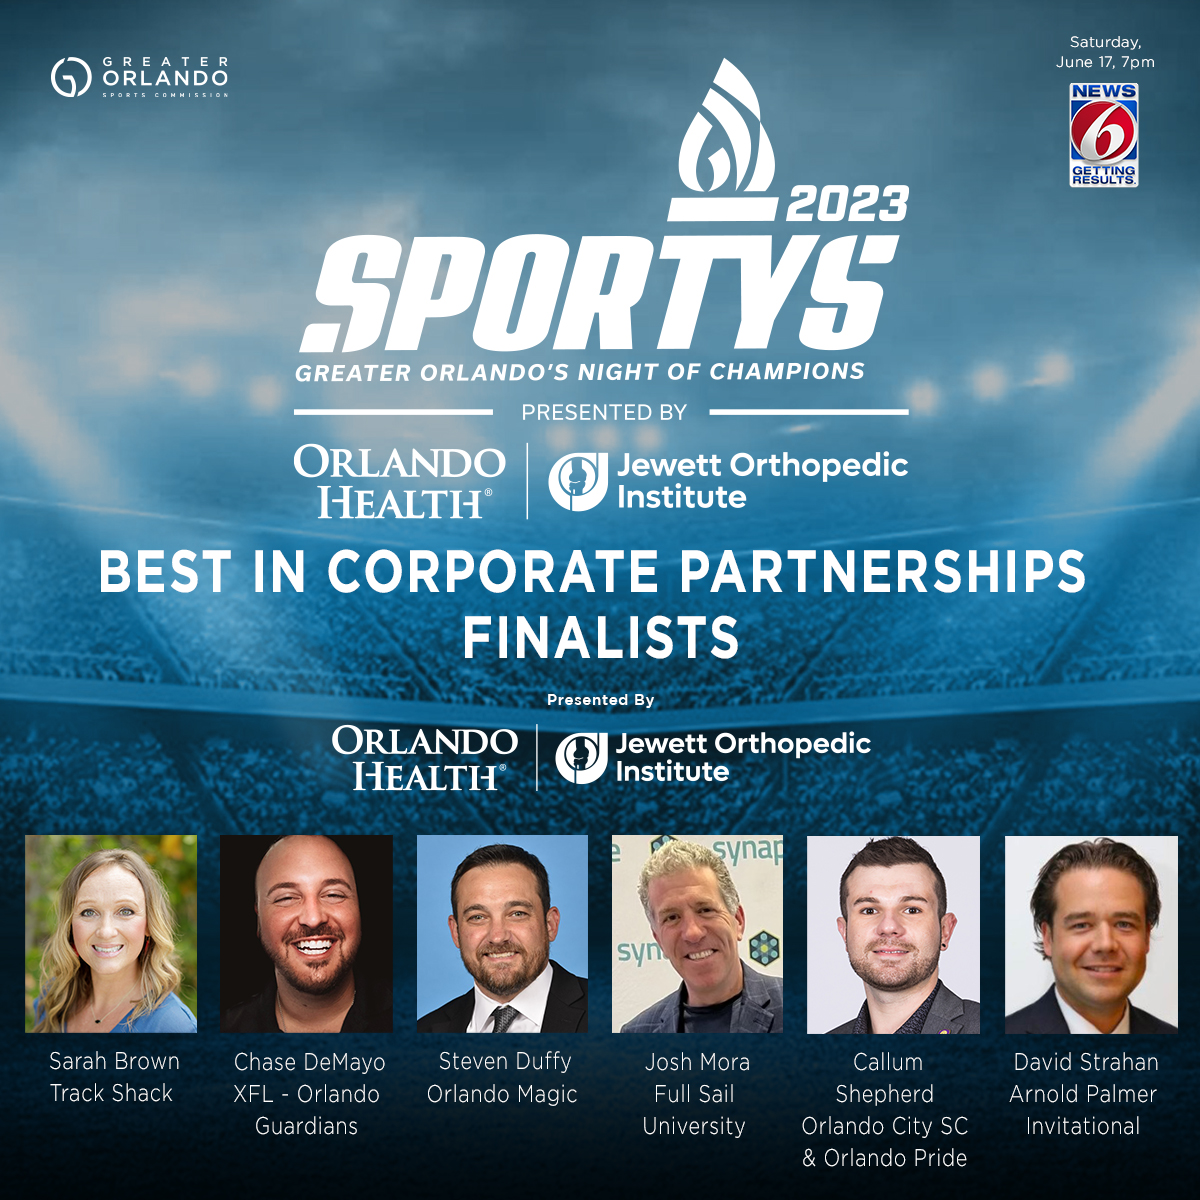 GO Sports - Social IG - SPORTYS 2023 6 finalists - Corporate Partnerships copy